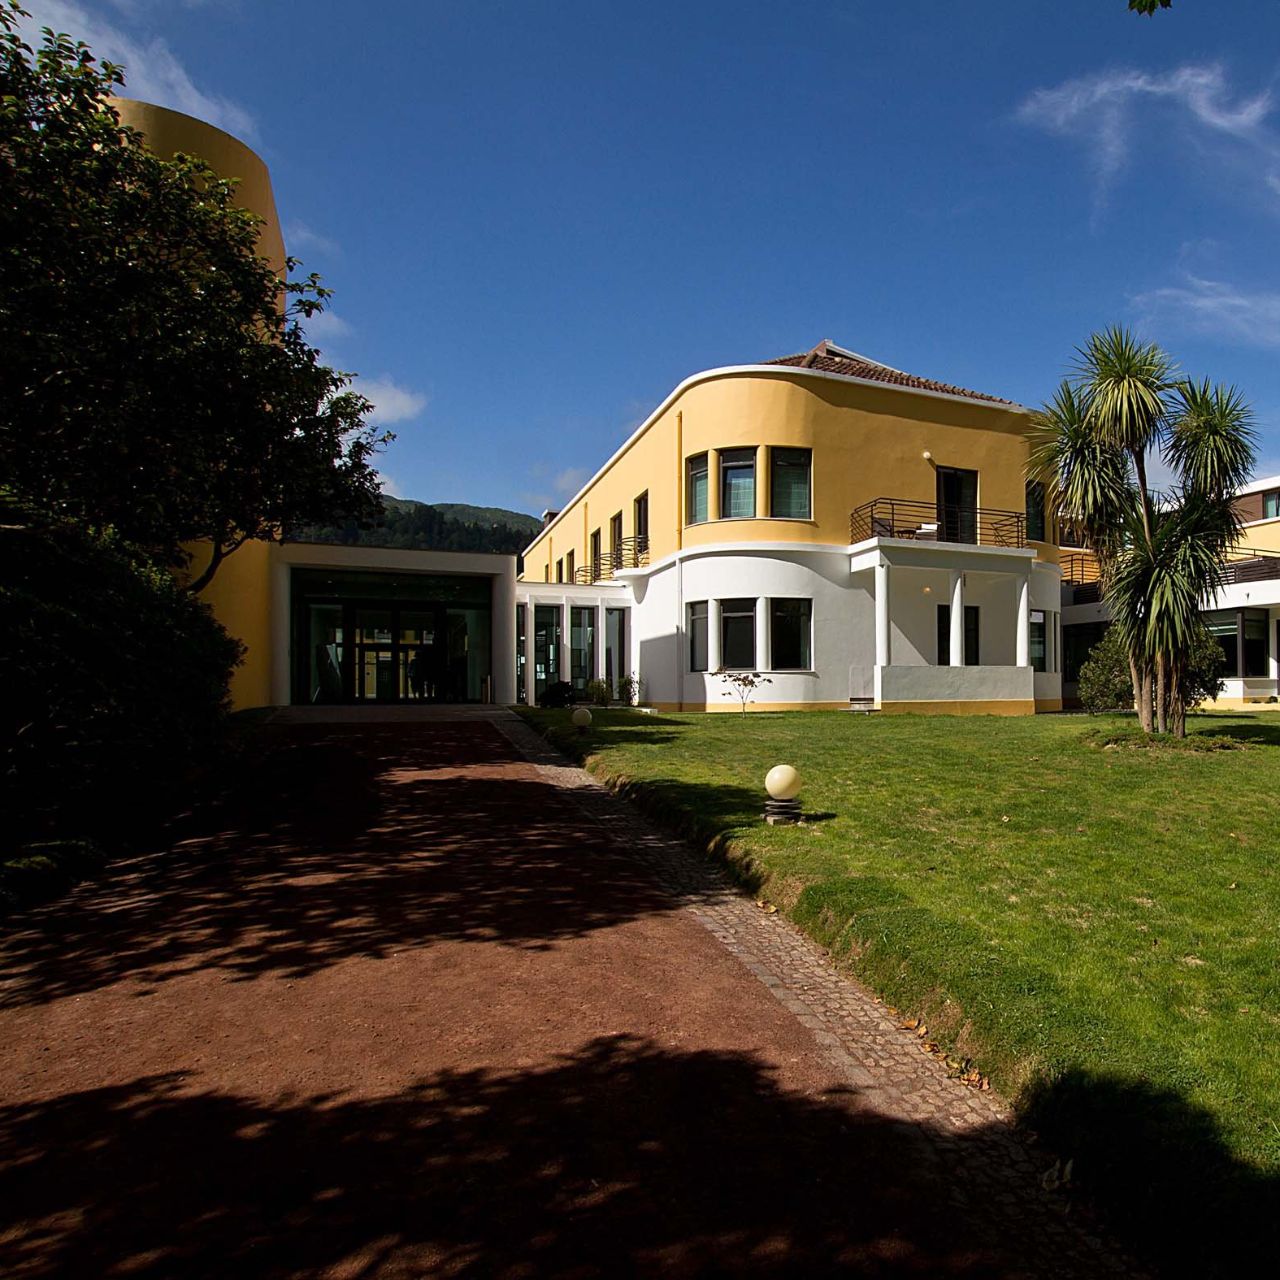 Hotel Terra Nostra Garden - Azores - Great prices at HOTEL INFO